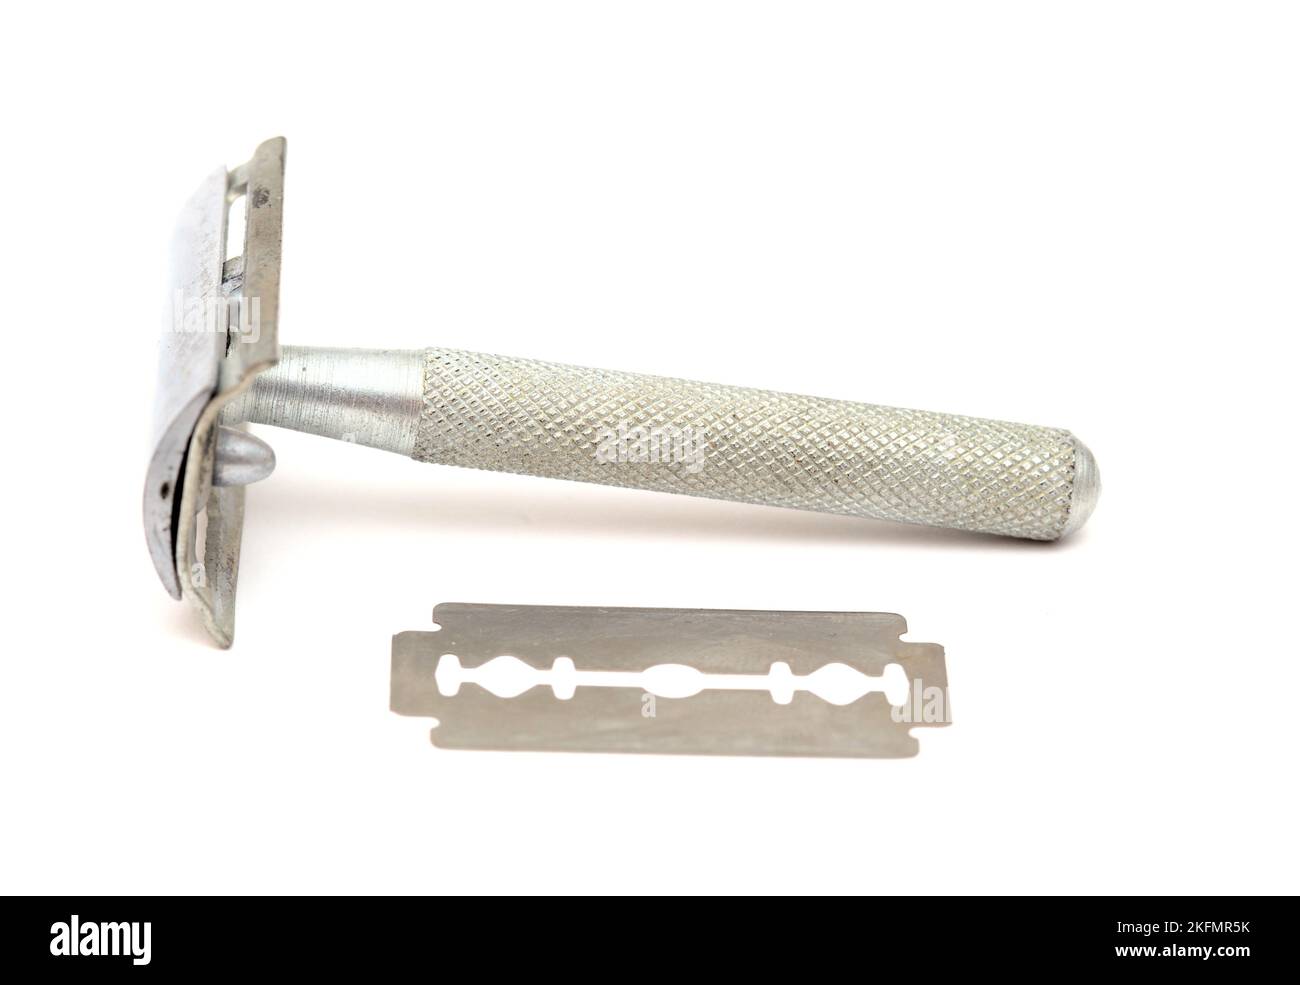 Old style steel safety razor, isolated on white background Stock Photo